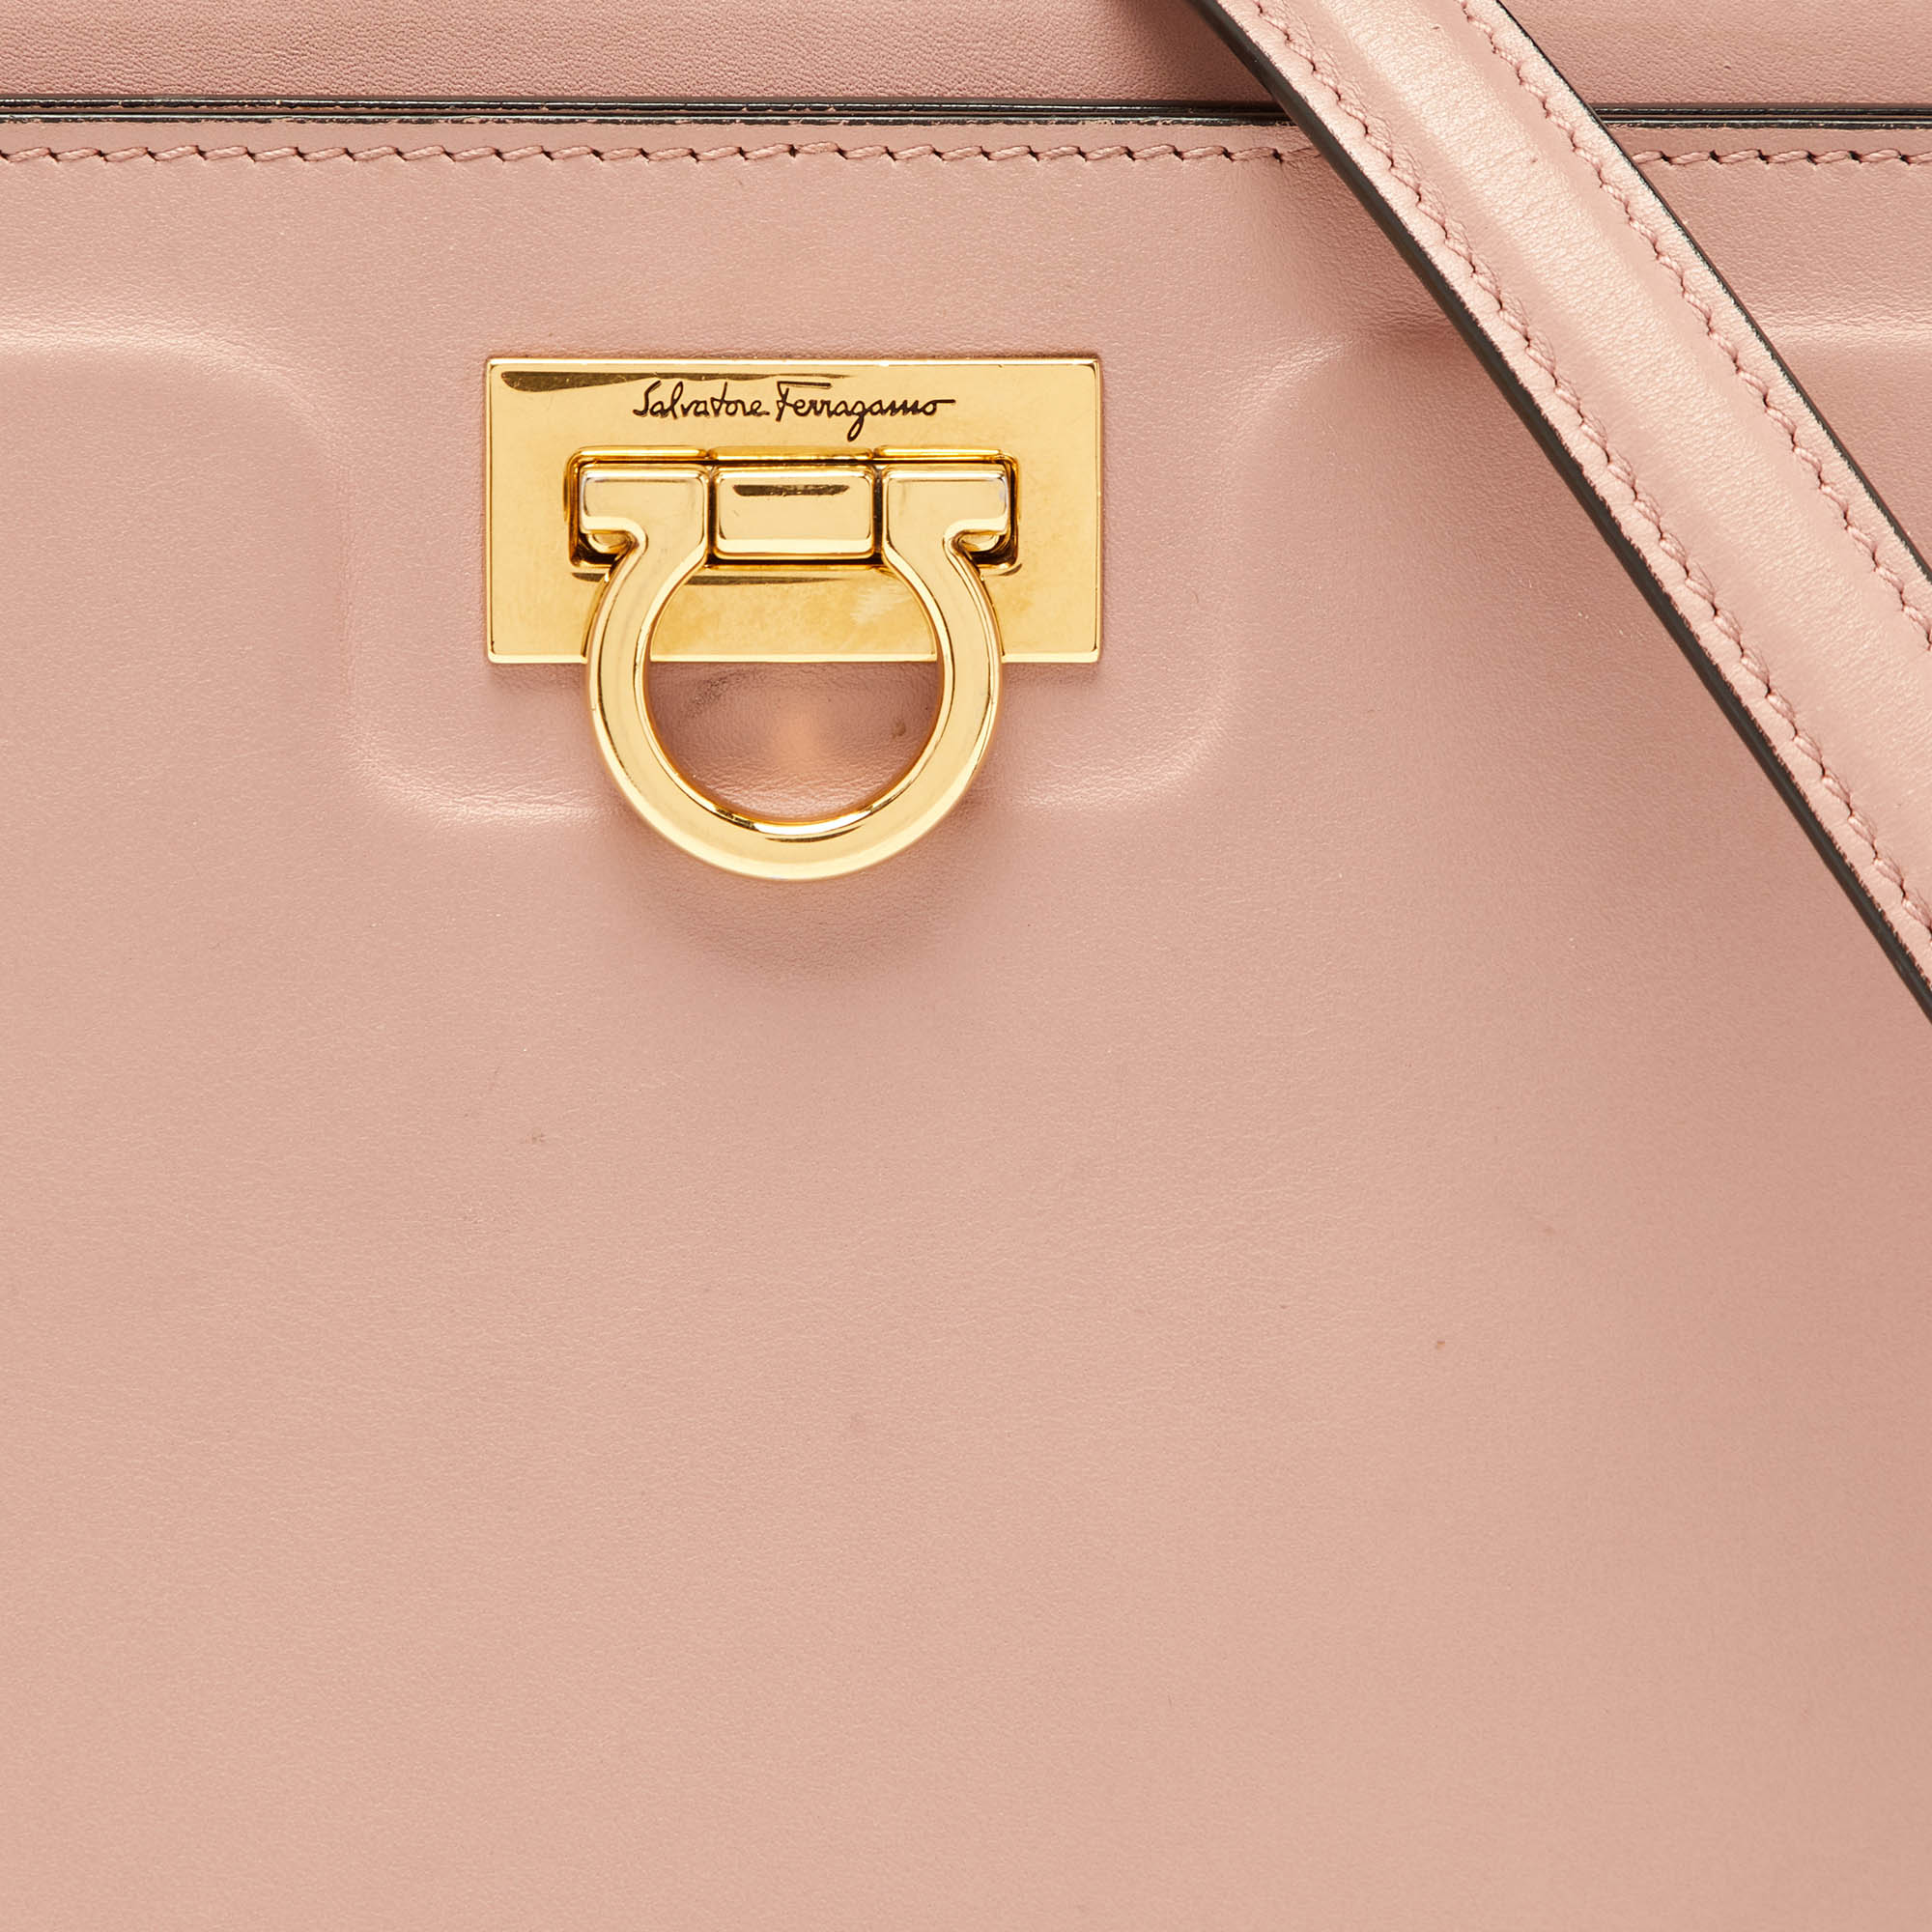 Salvatore Ferragamo Pink Leather Trifolio Crossbody Bag